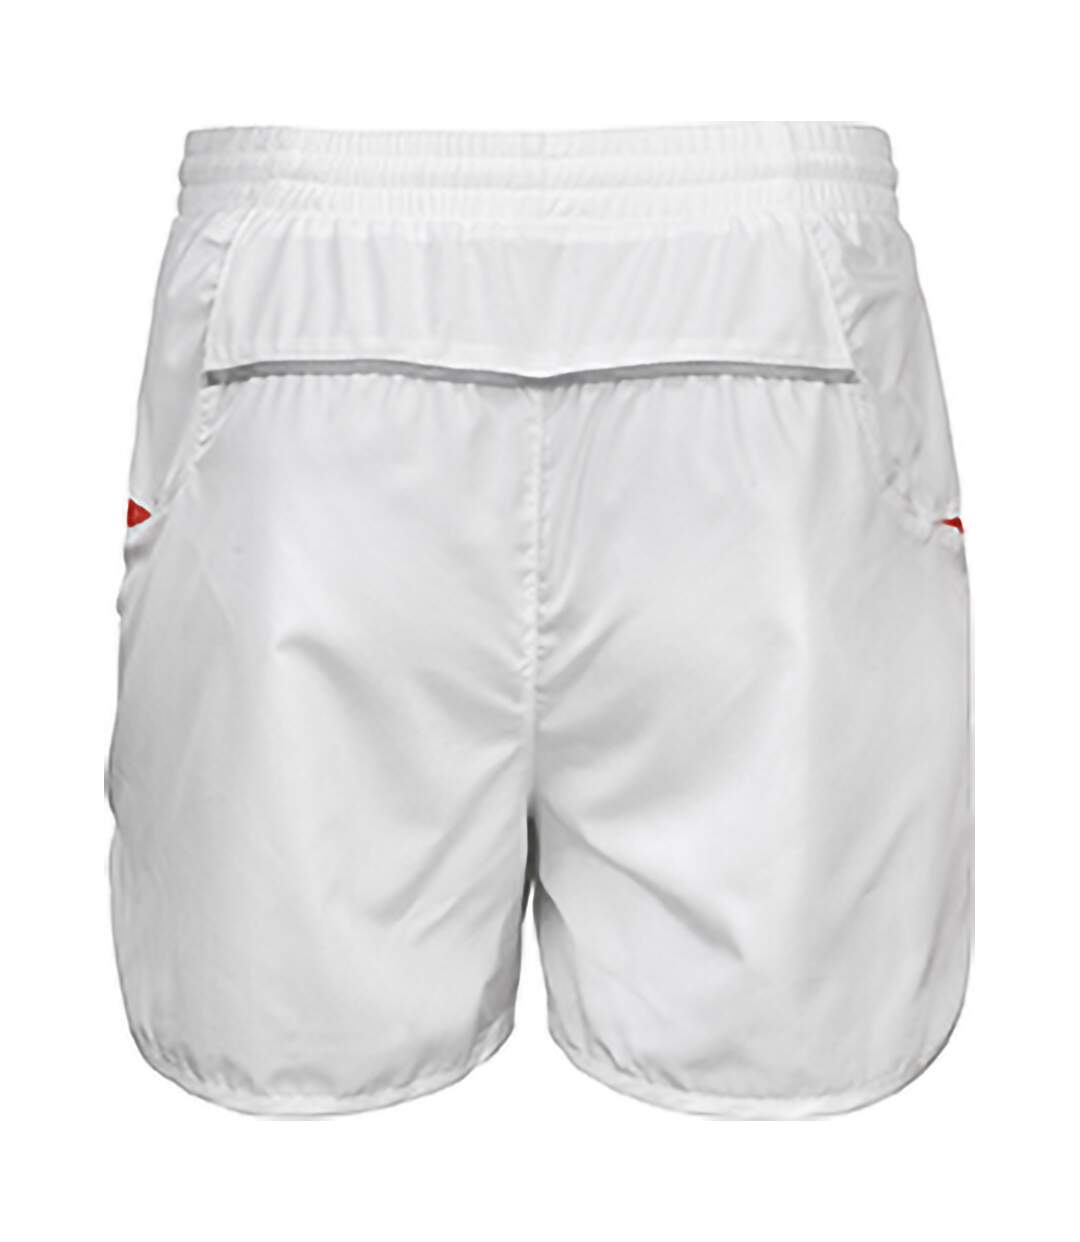 Spiro - Short de sport - Homme (Blanc/Rouge) - UTRW1478